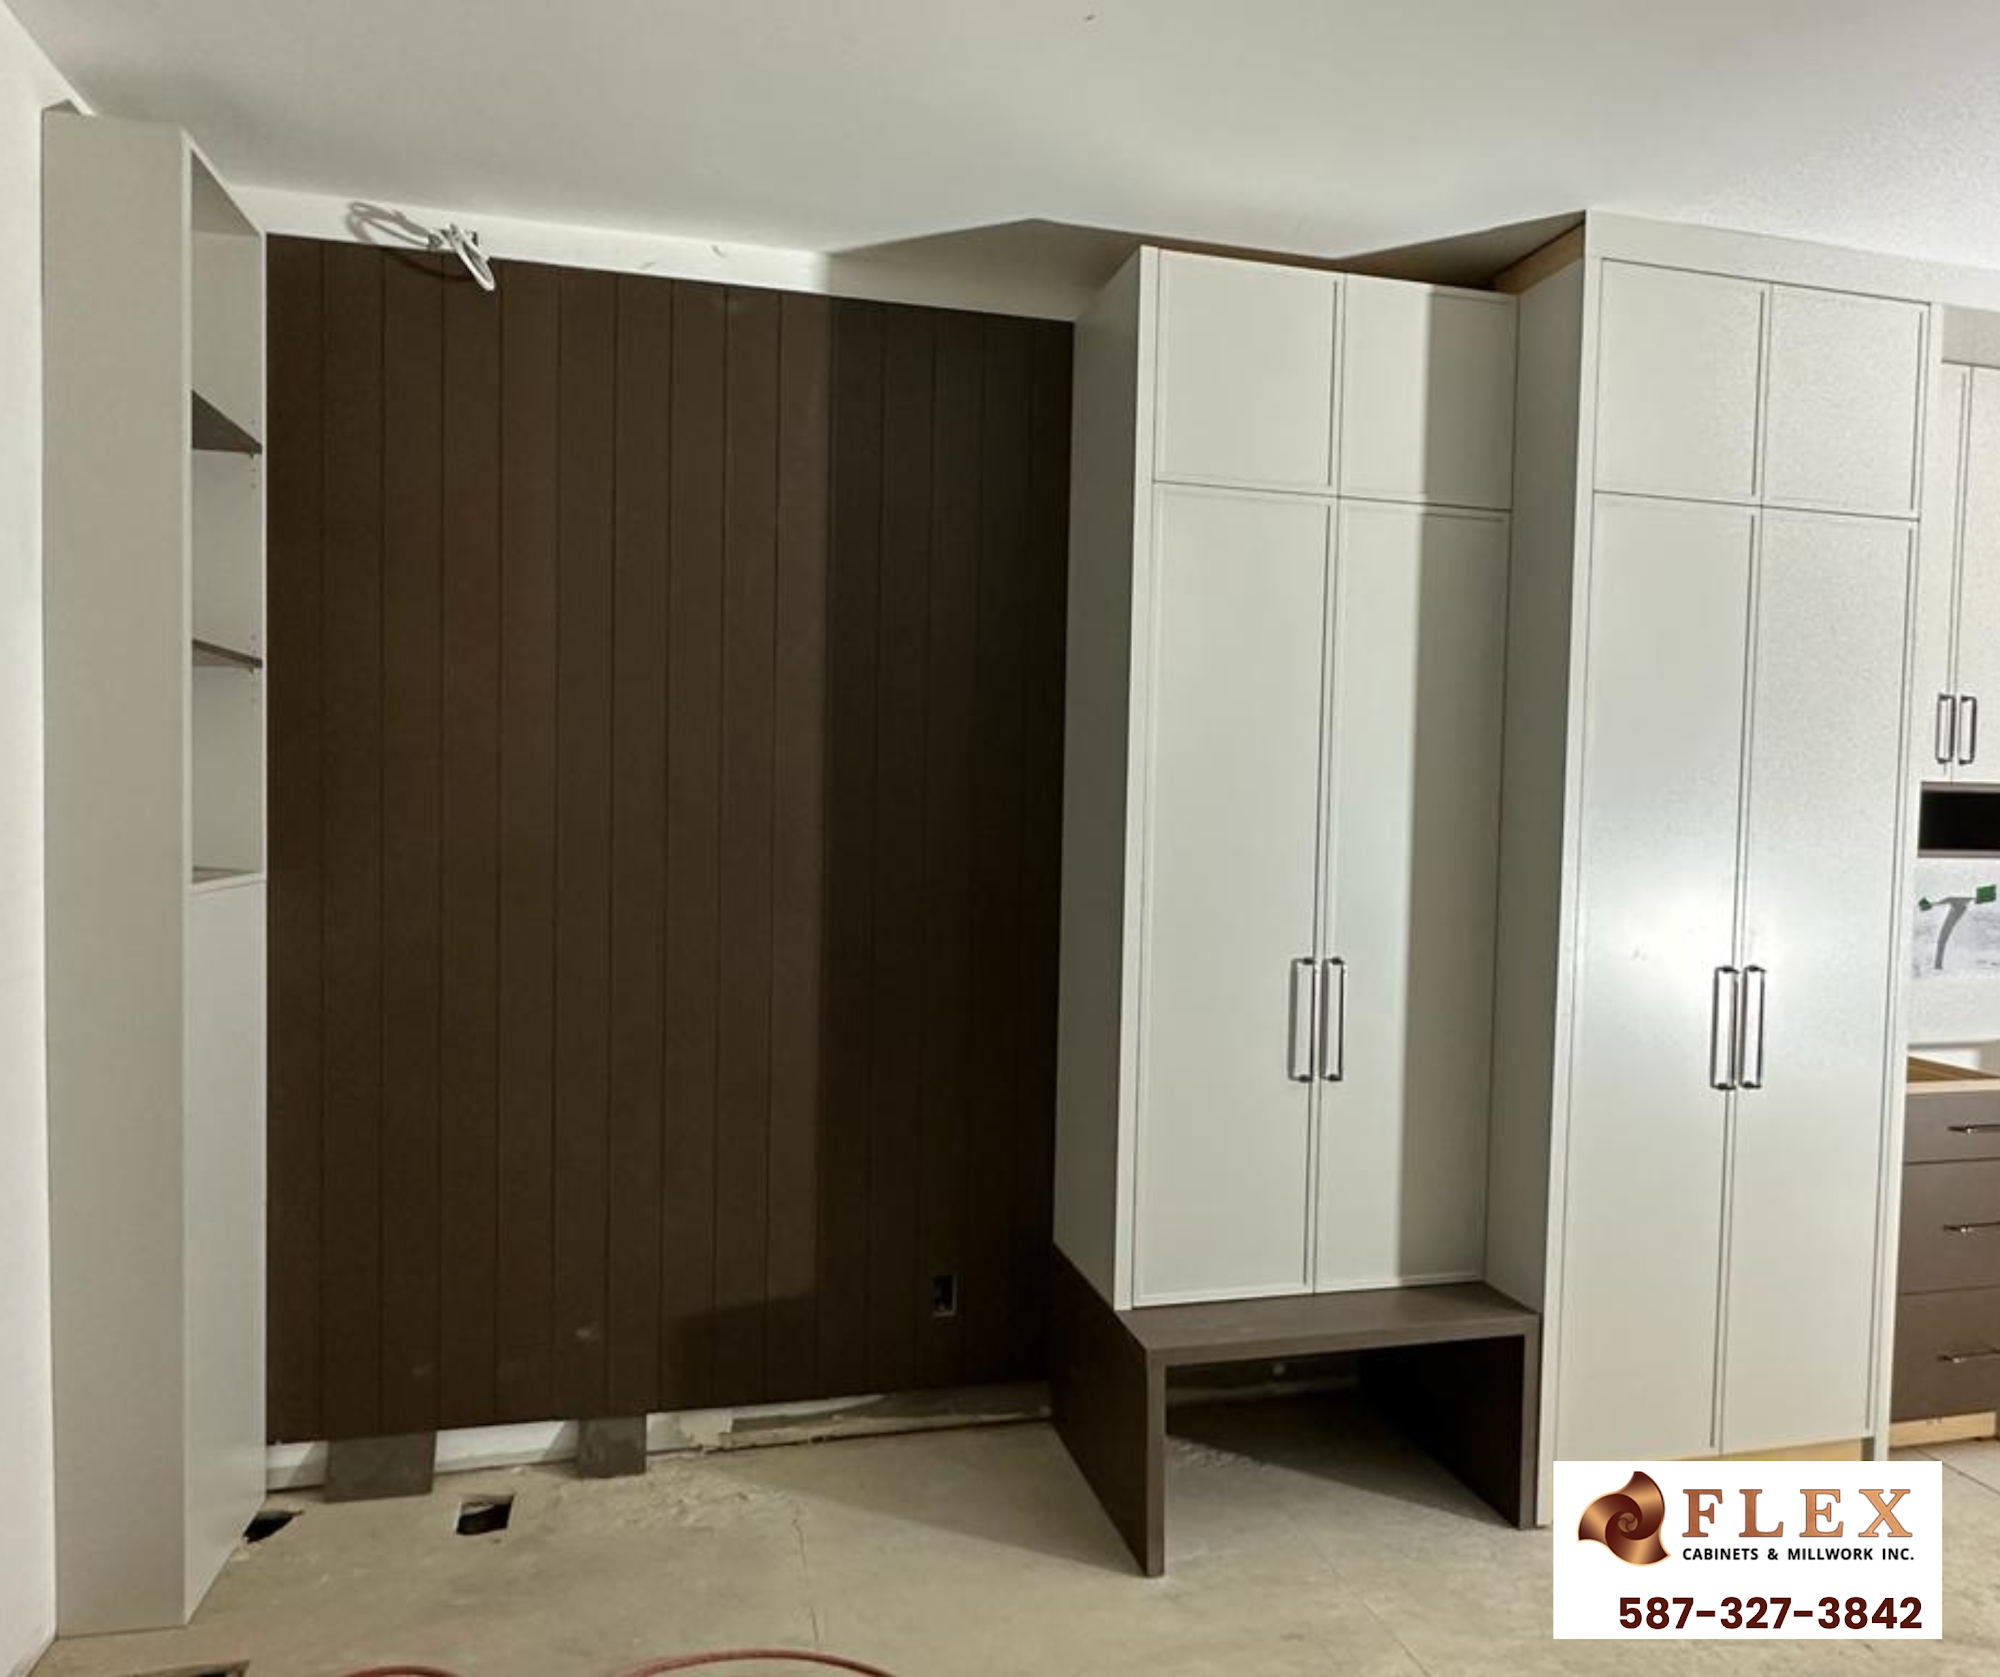 Flex Cabinets & Millwork Inc.